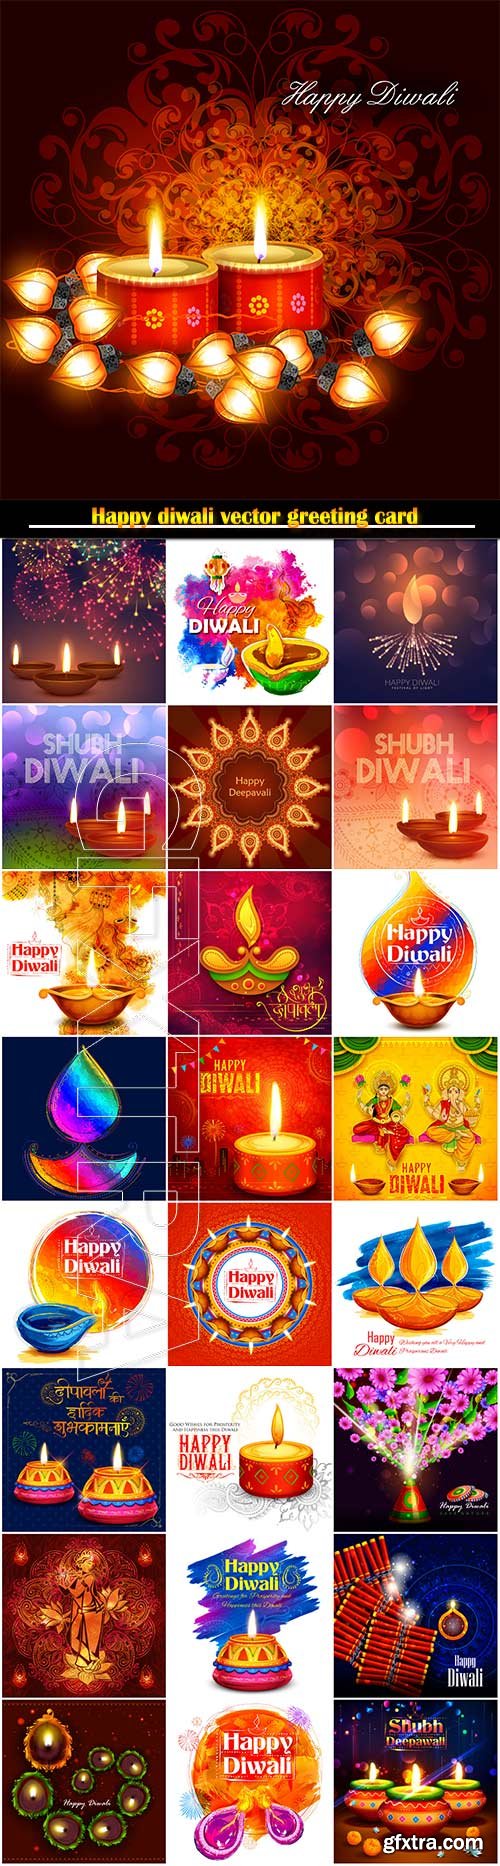 Happy diwali vector greeting card